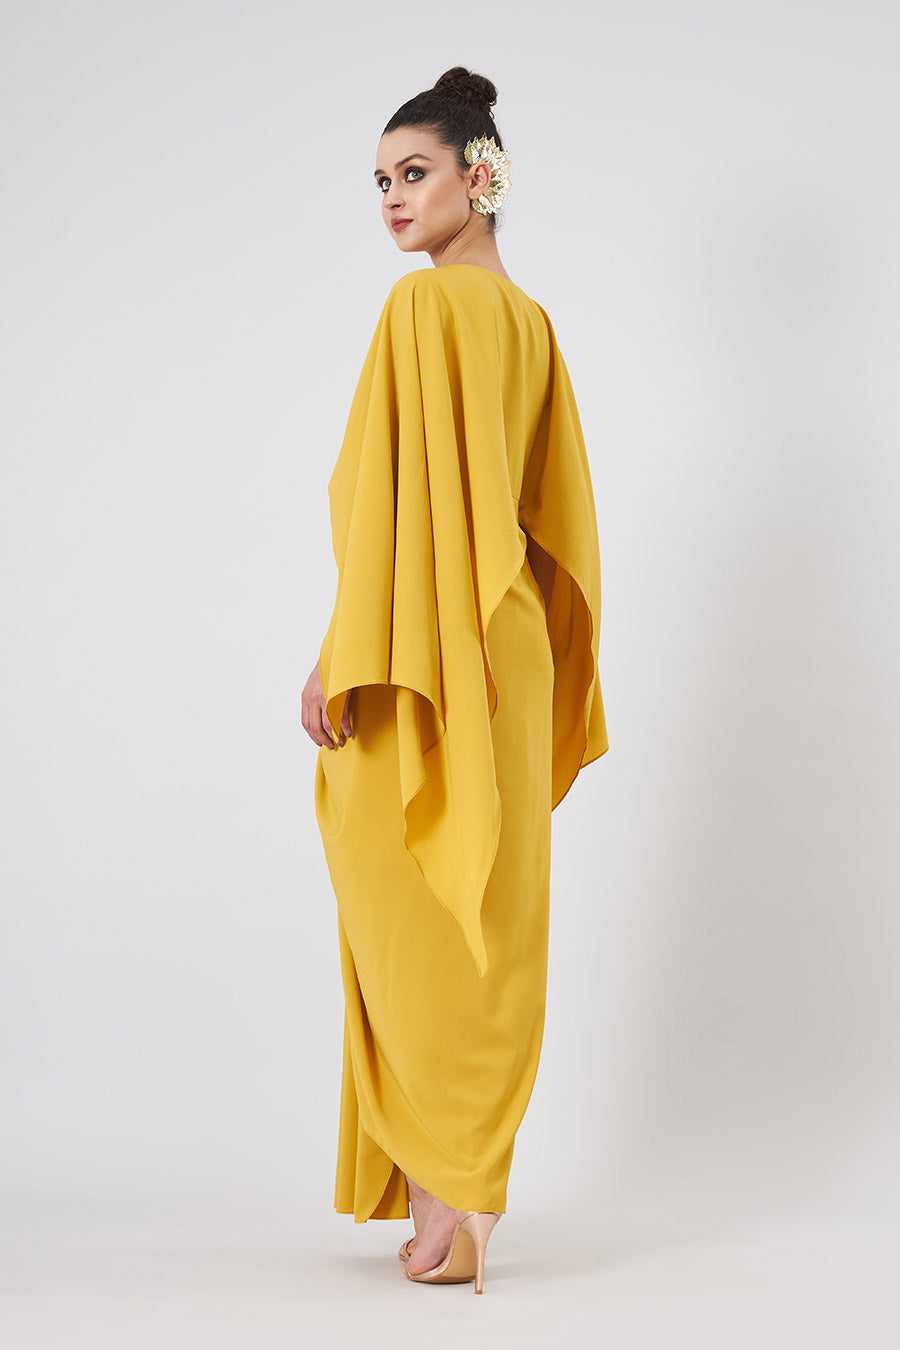 Metallic Embroidery Yellow Drape Dress